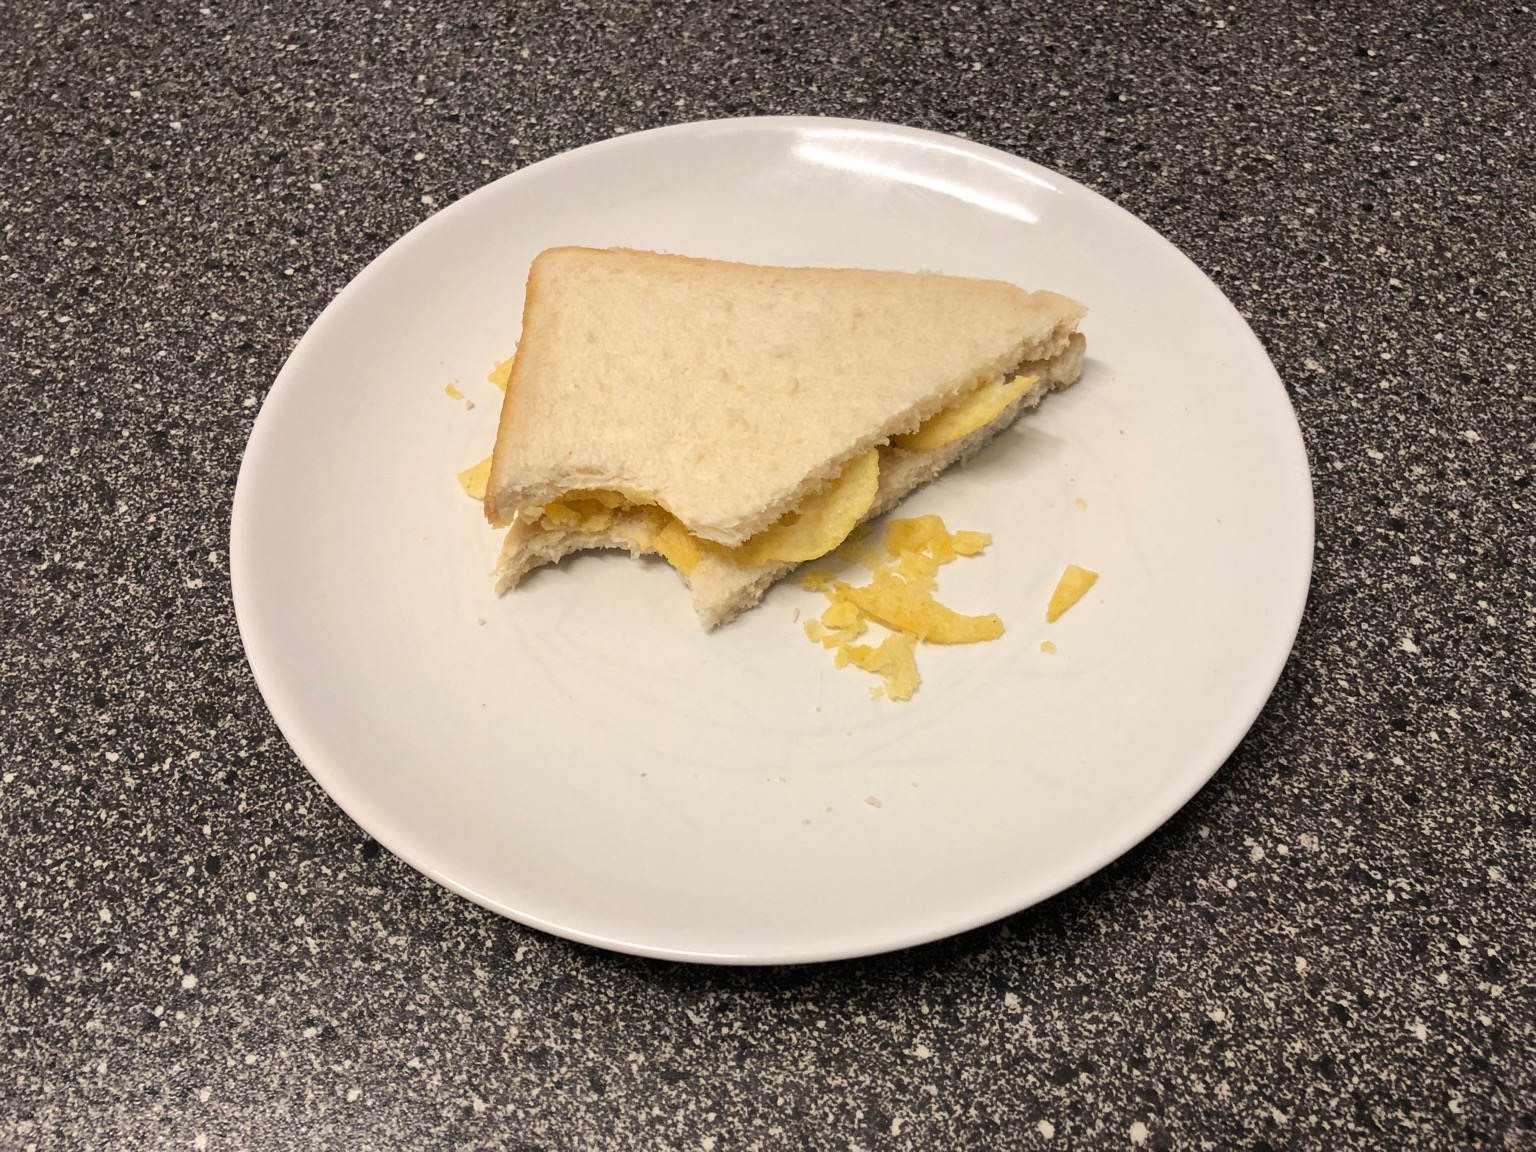 Diagonally-cut crisp sandwich with a bitten corner